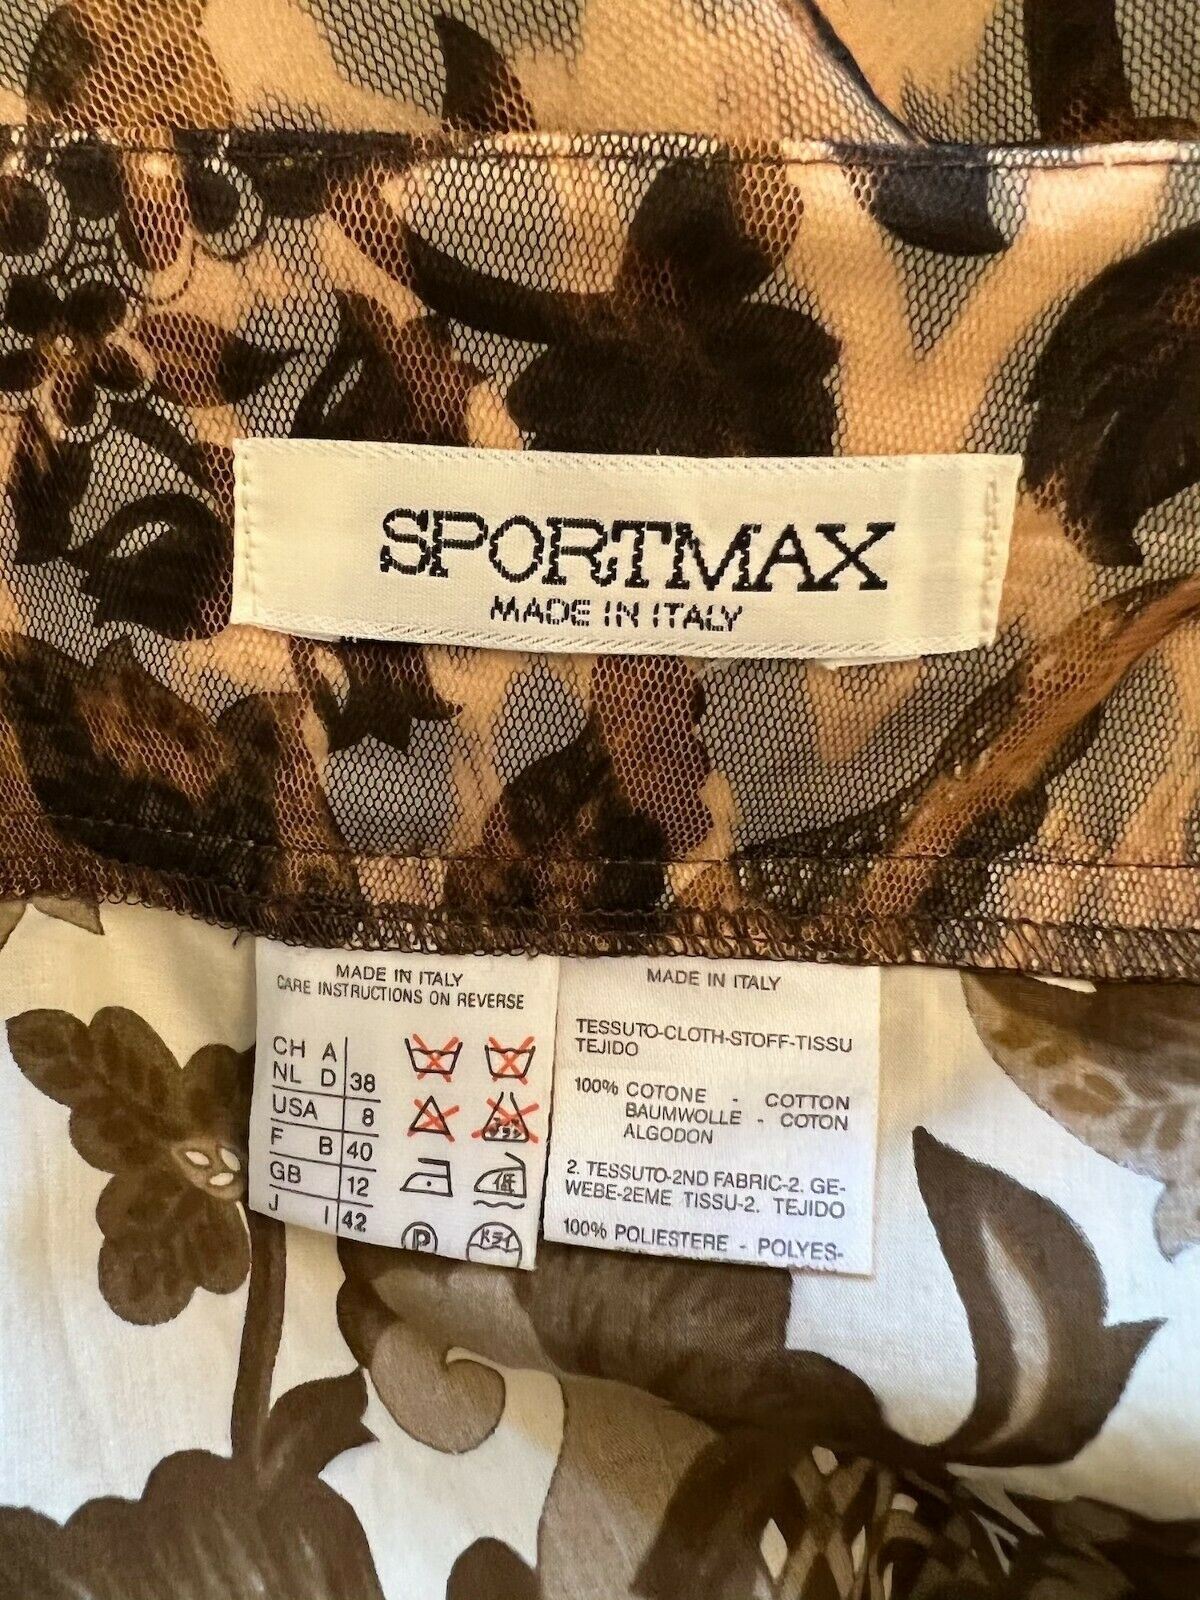 Sportmax Max Mara Womens Vintage Brown Floral Mesh Bodycon Mini Skirt UK 10 US 6 EU 38 IT 42 Timeless Fashions